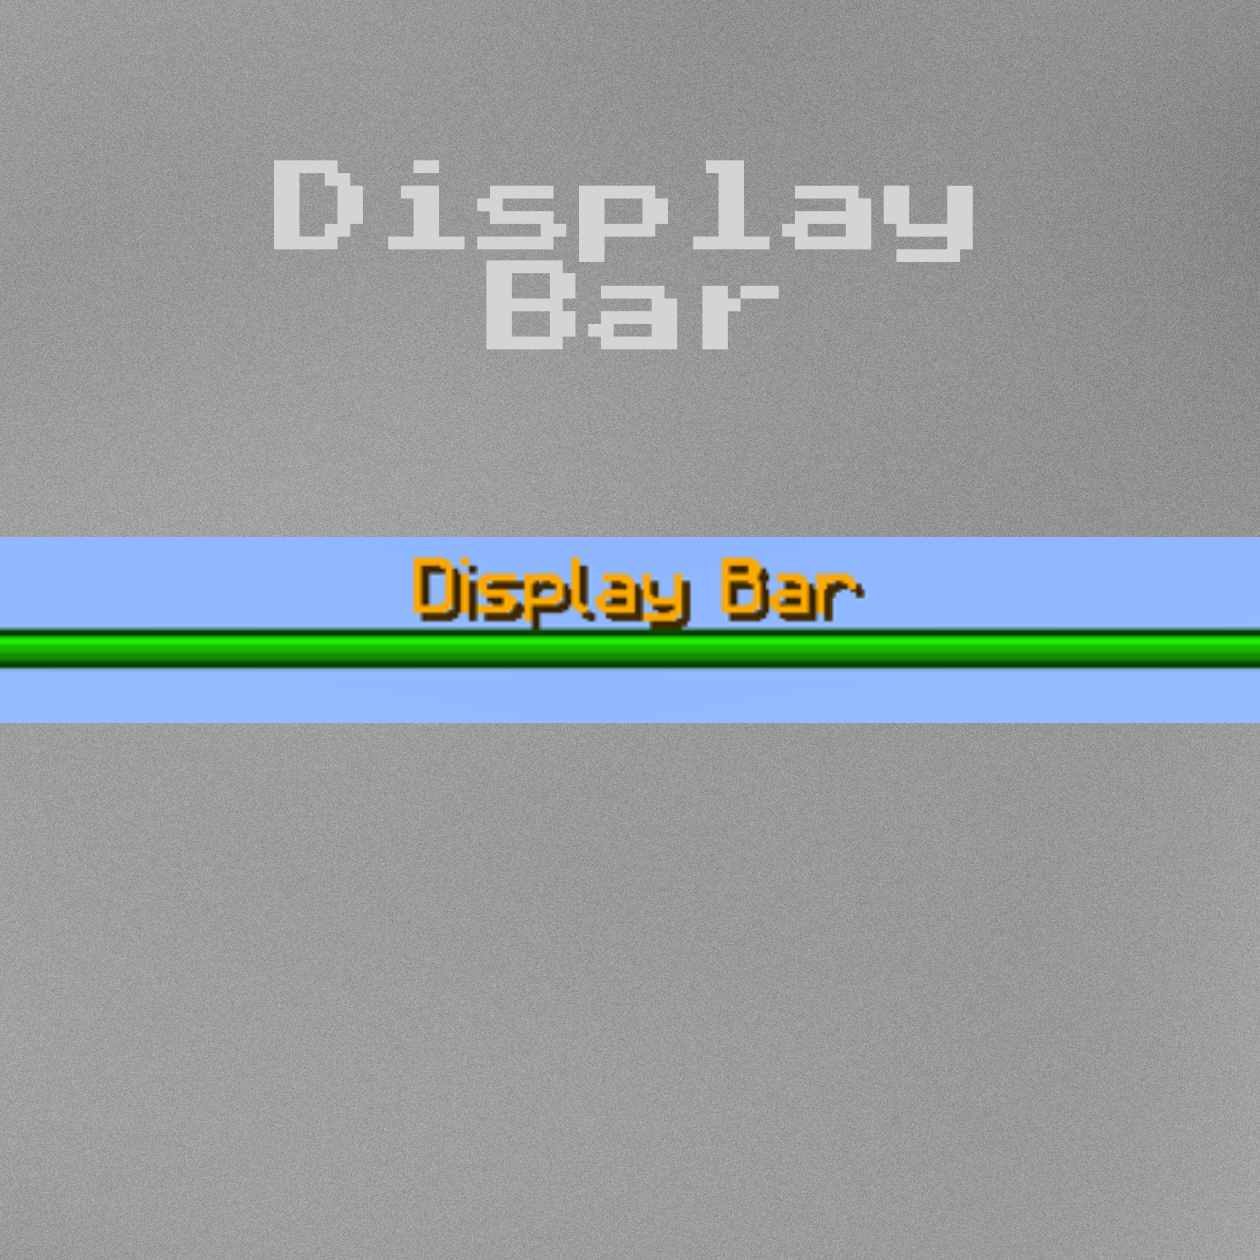 Display Bar